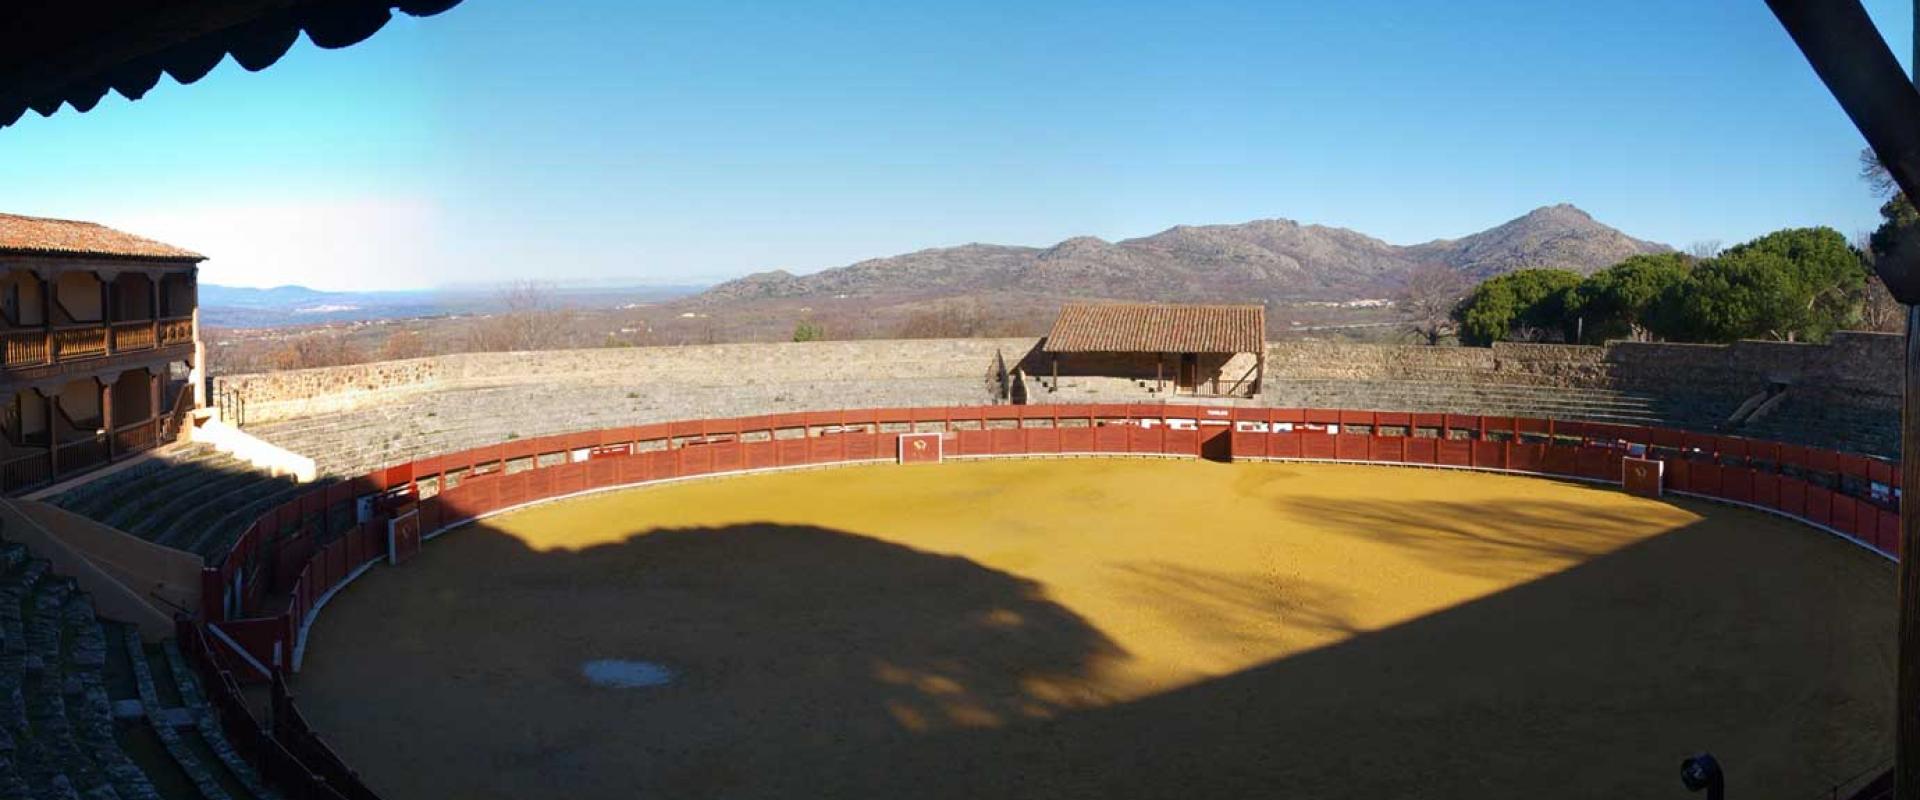 Bullfighting Museum, Béjar